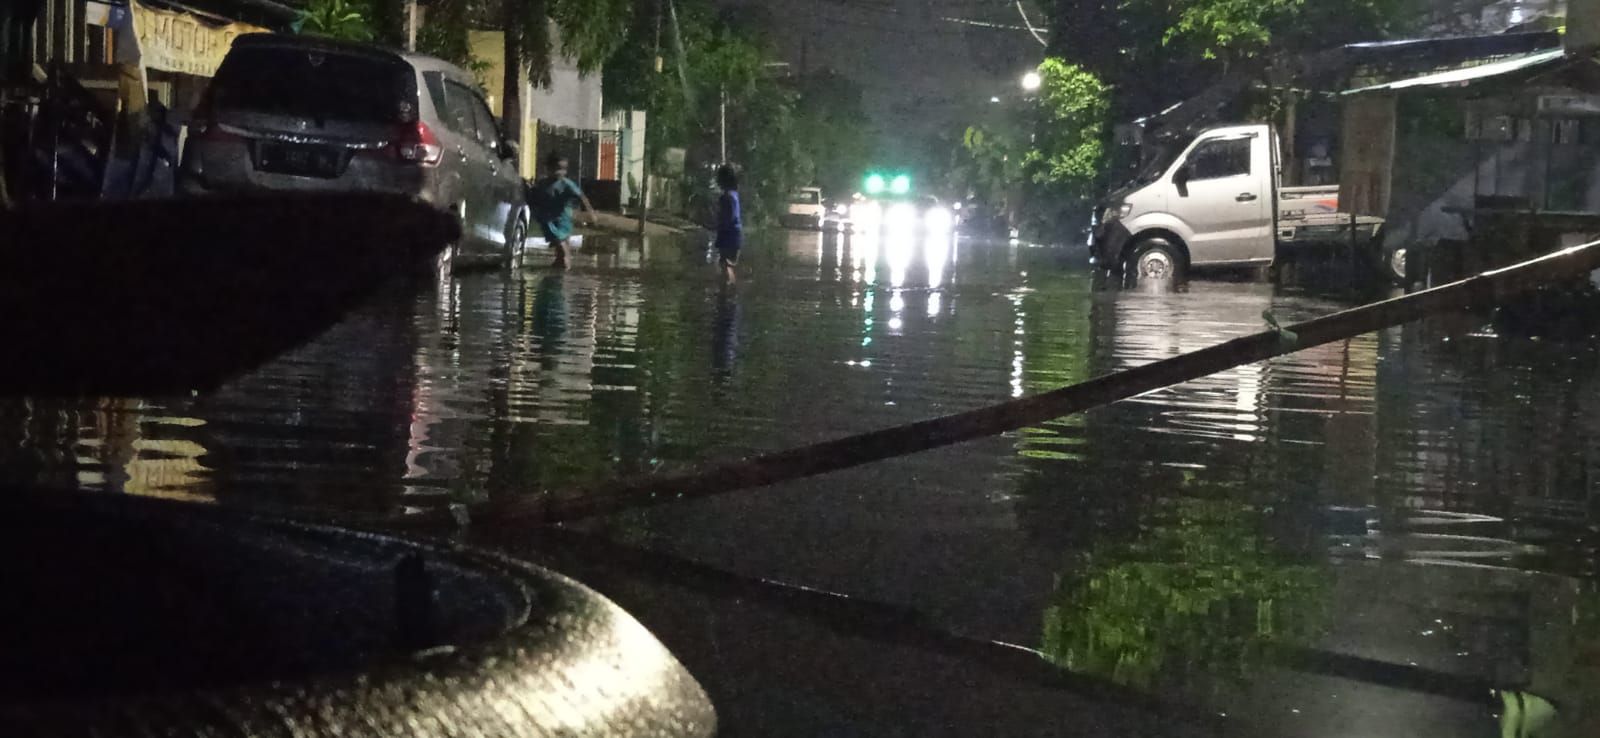 Jalan Ikan Dorang, Perak Barat, Surabaya diportal akibat Banjir, diketahui genangan air mulai masuk ke rumah warga